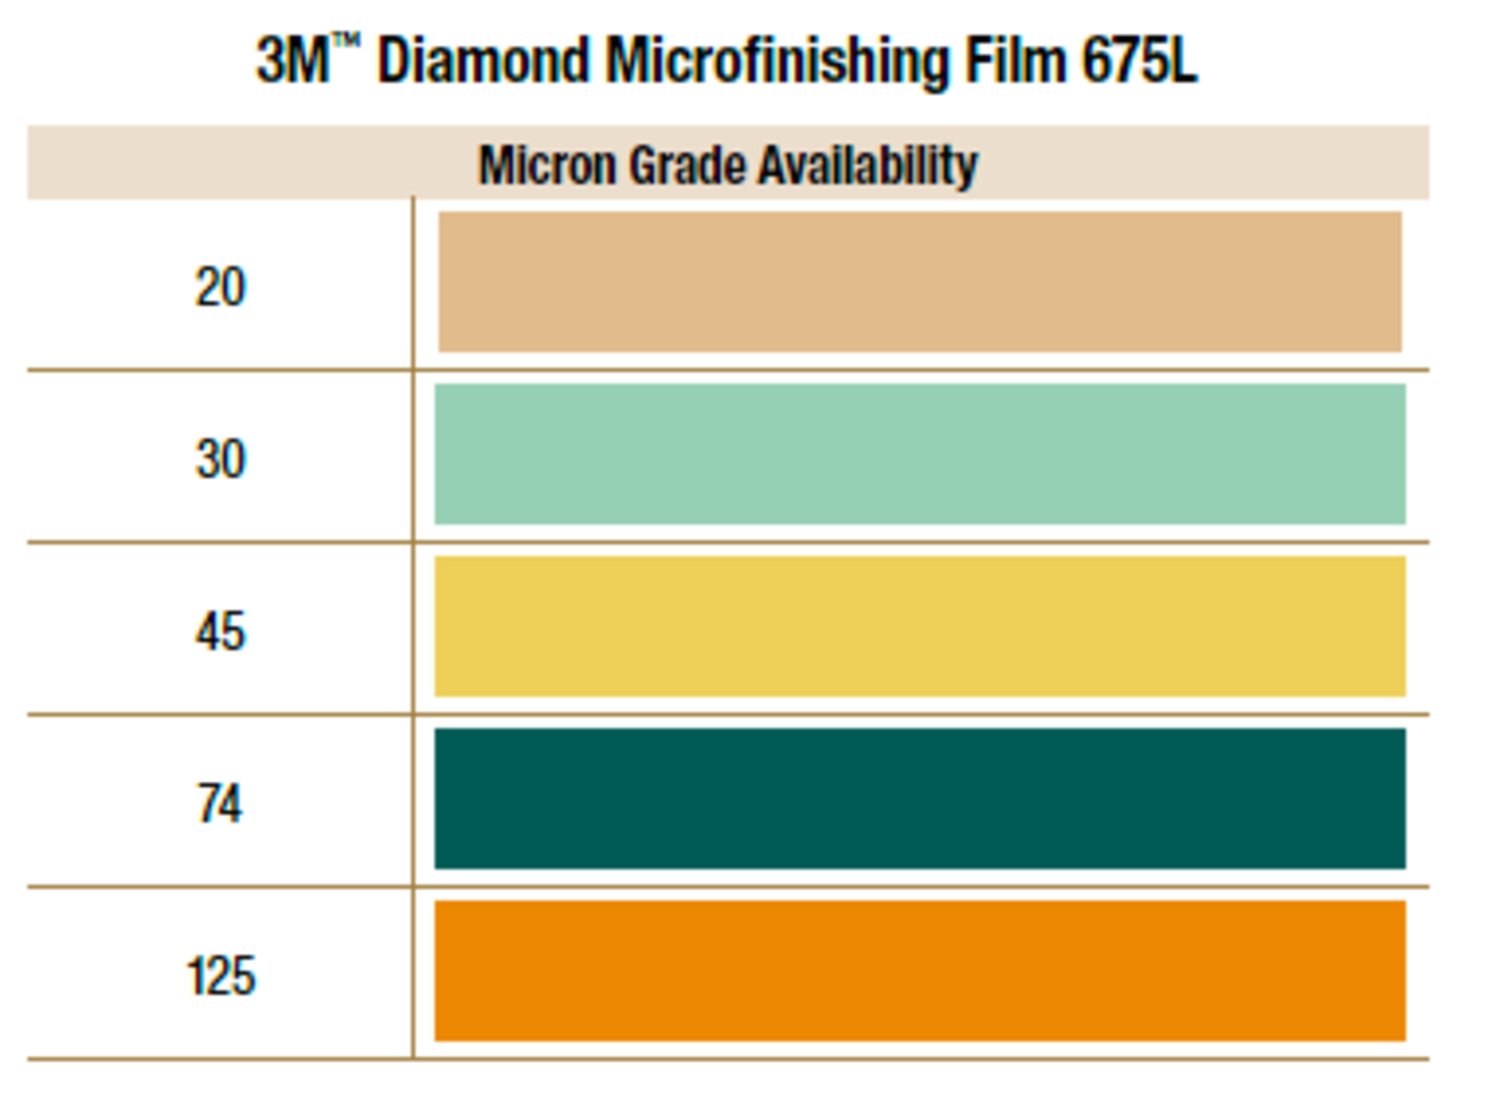 7100031898 - 3M Diamond Microfinishing Film Roll 675L, 45 Mic, Config